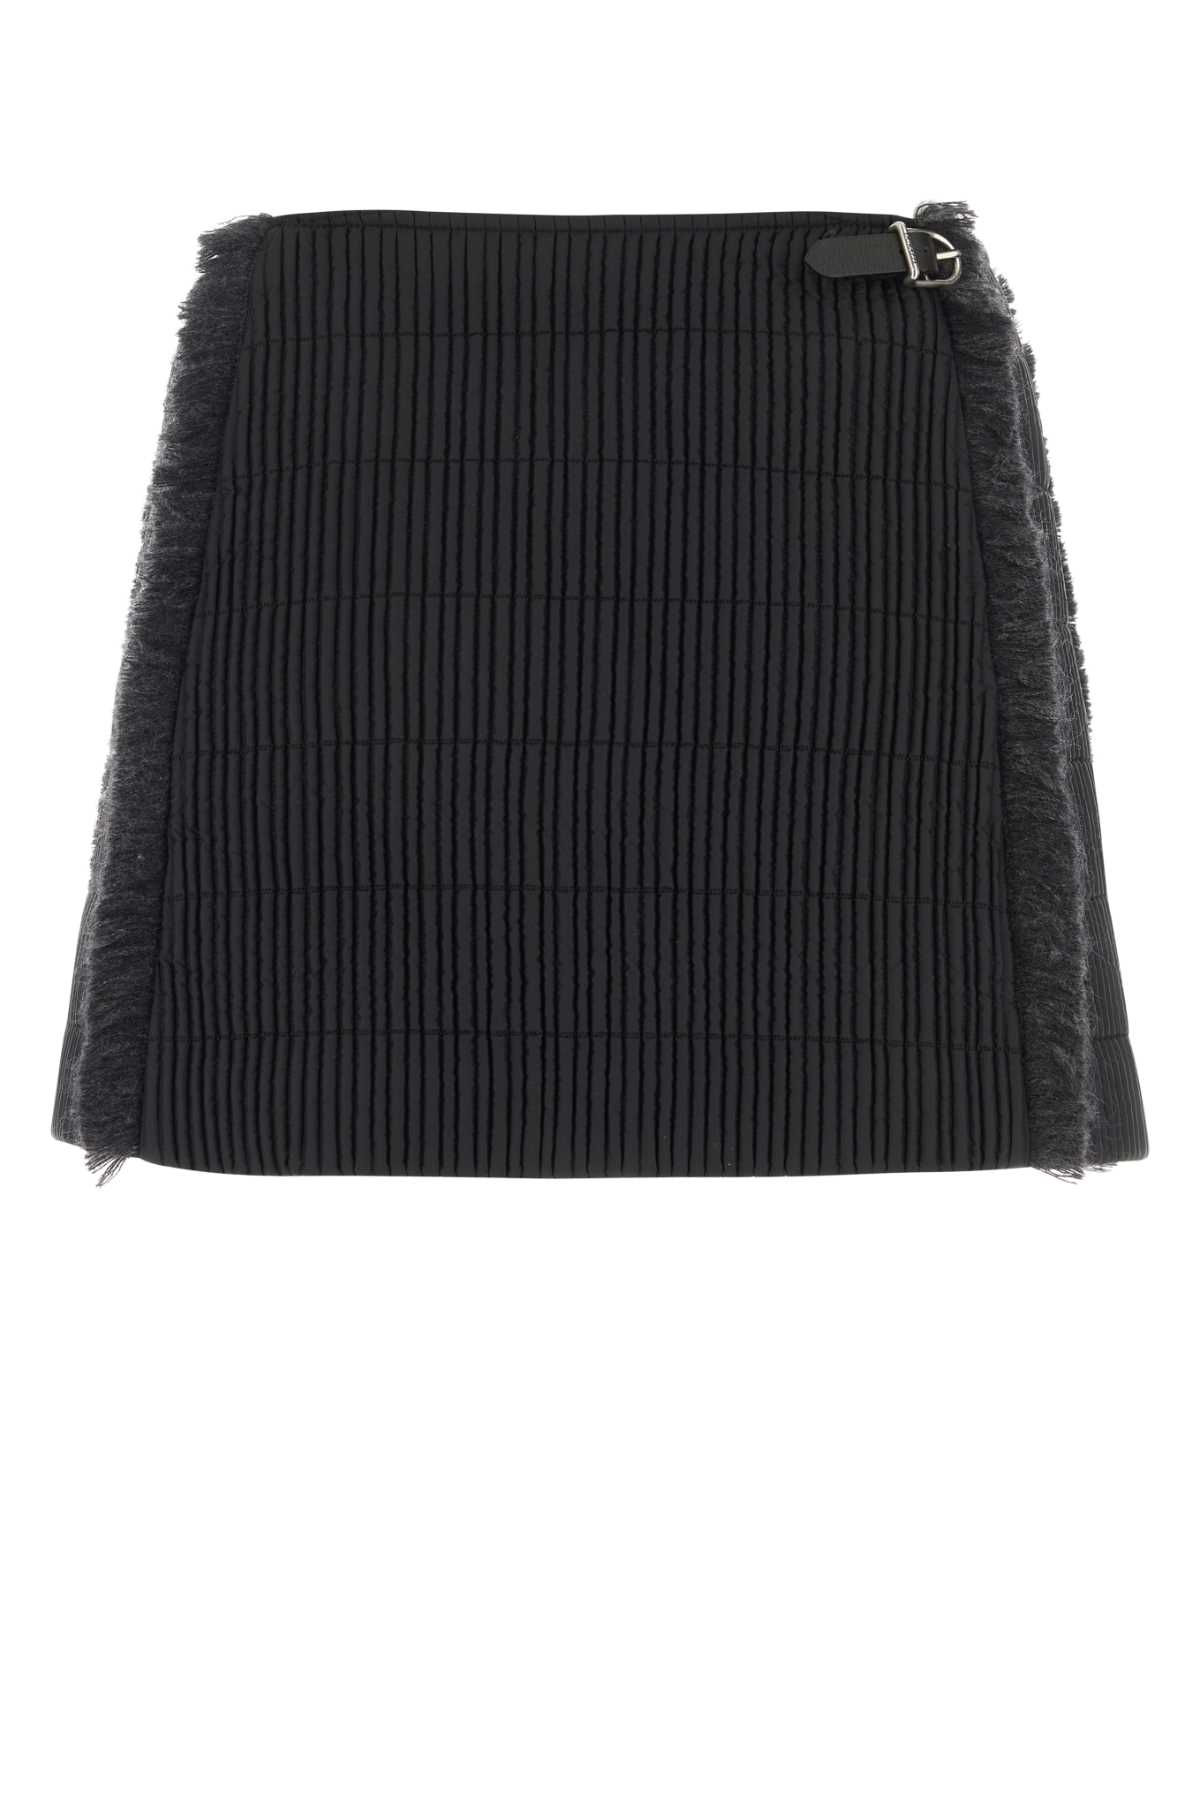 Shop Durazzi Milano Black Stretch Polyester Mini Skirt